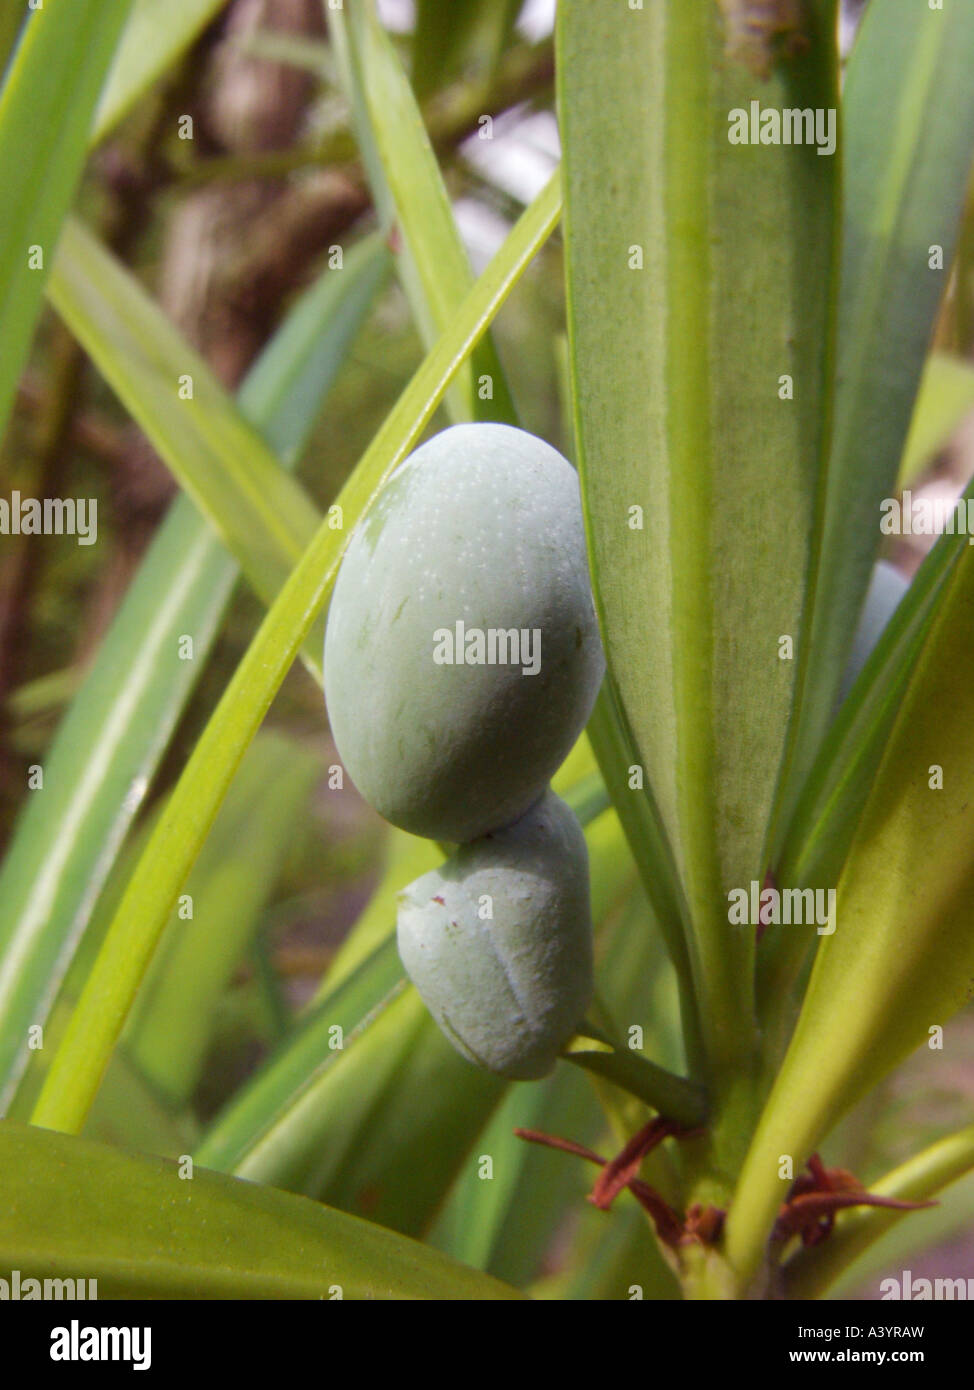 Podocarpus neriifolius (Podocarpus neriifolius), ripe seed with blue epimatium Stock Photo